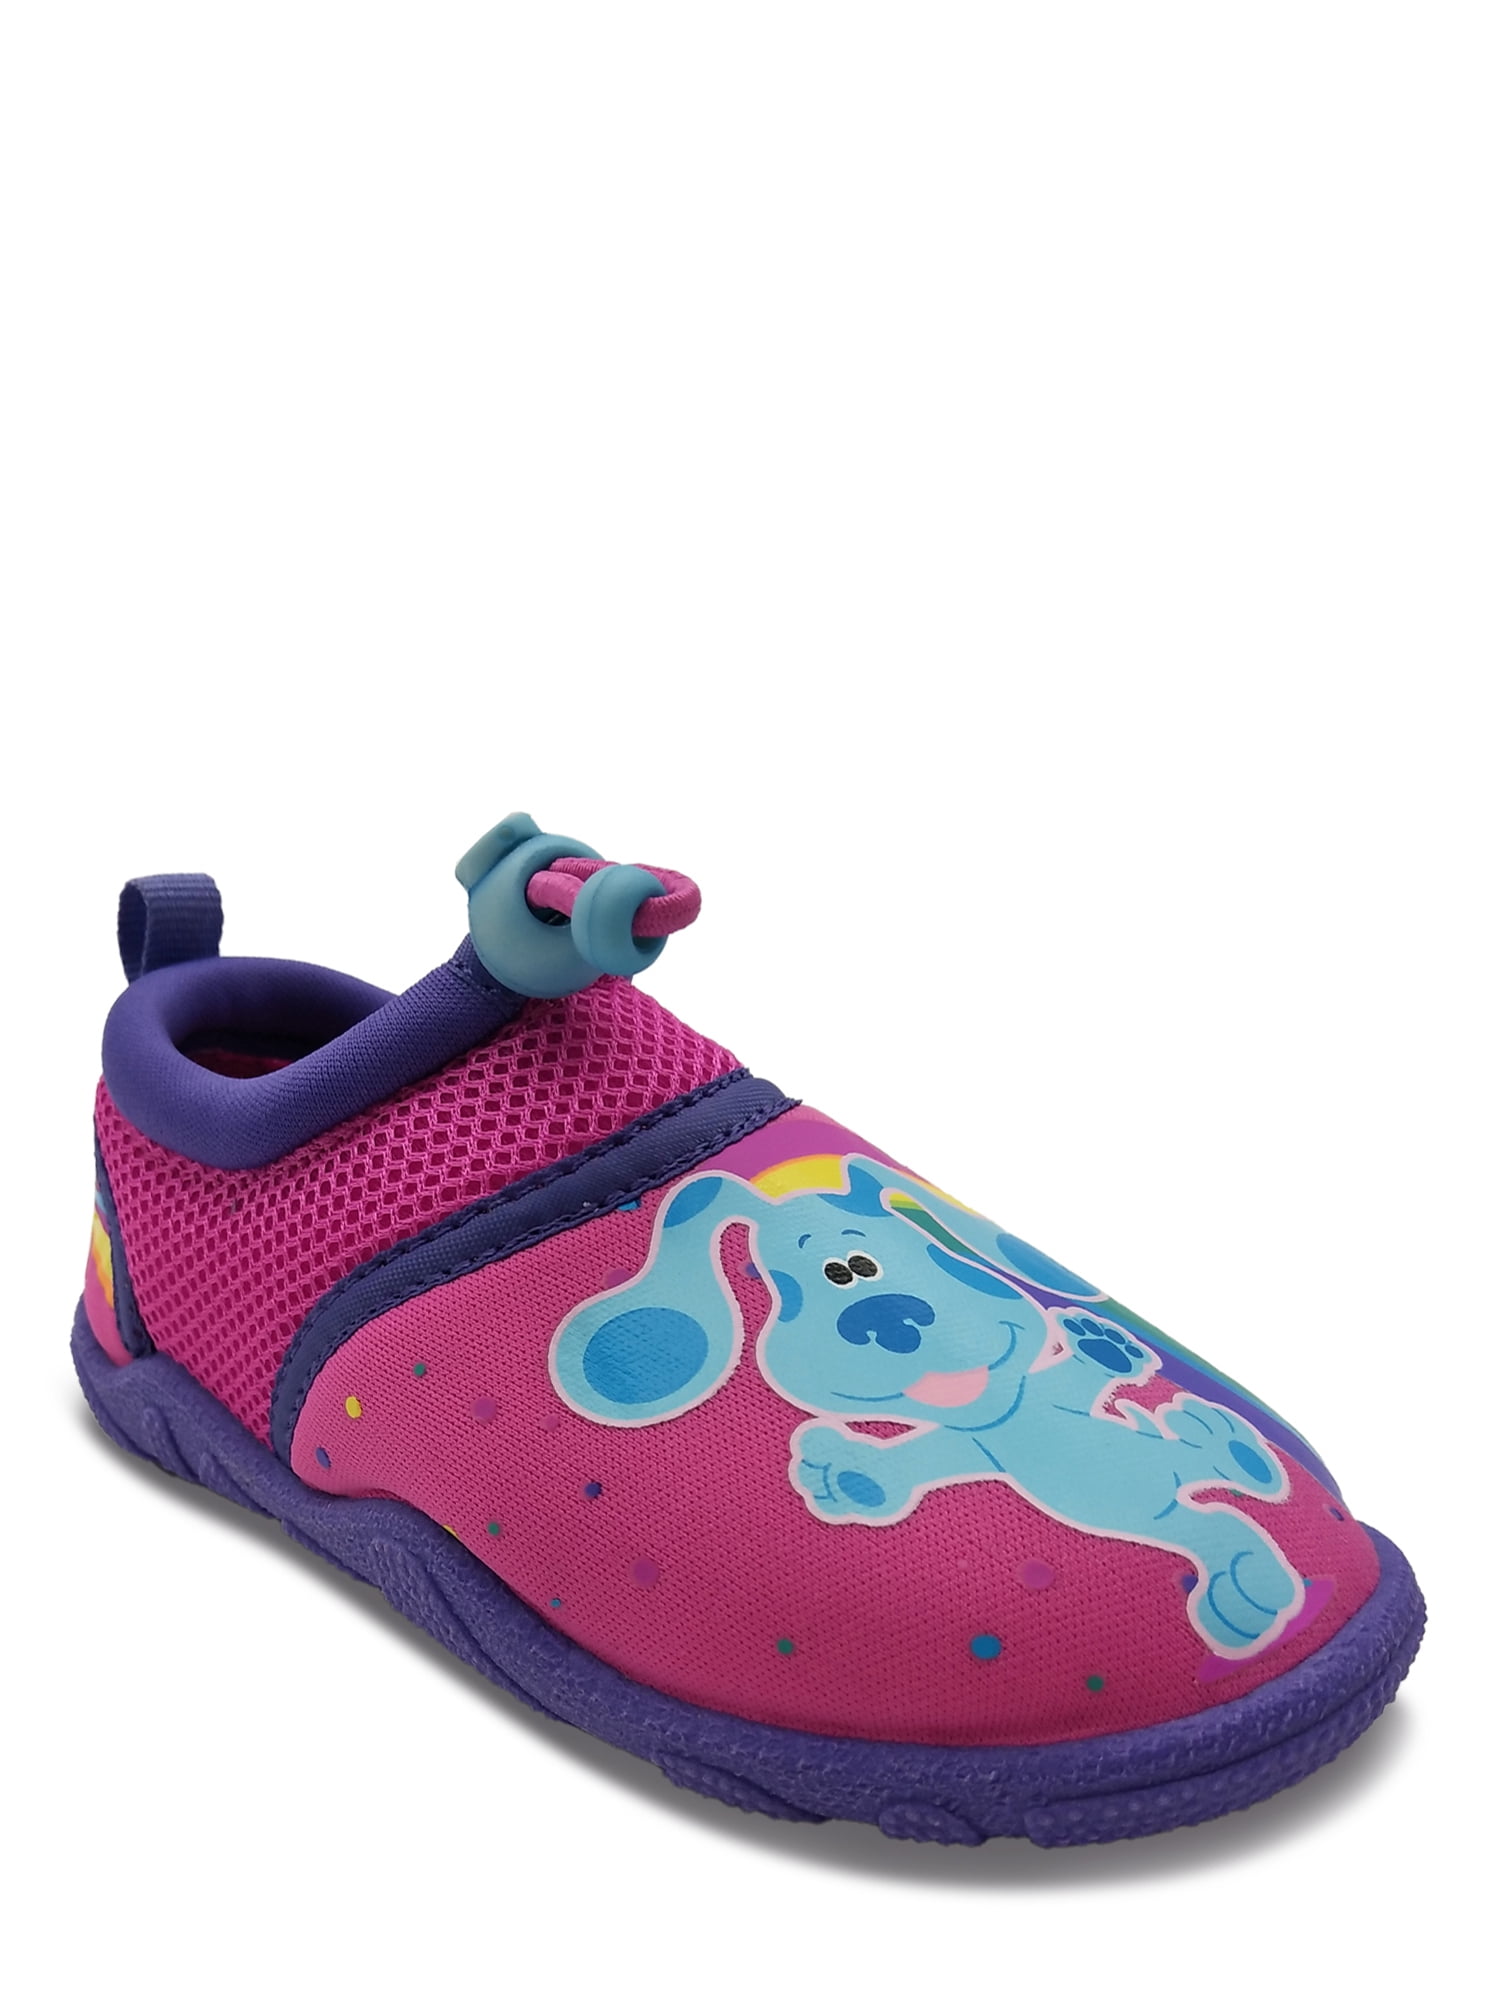 DISNEY FROZEN ANNA& ELSA Swim Shoes Water Size 5-6,7-8,9-10,11-12 F 